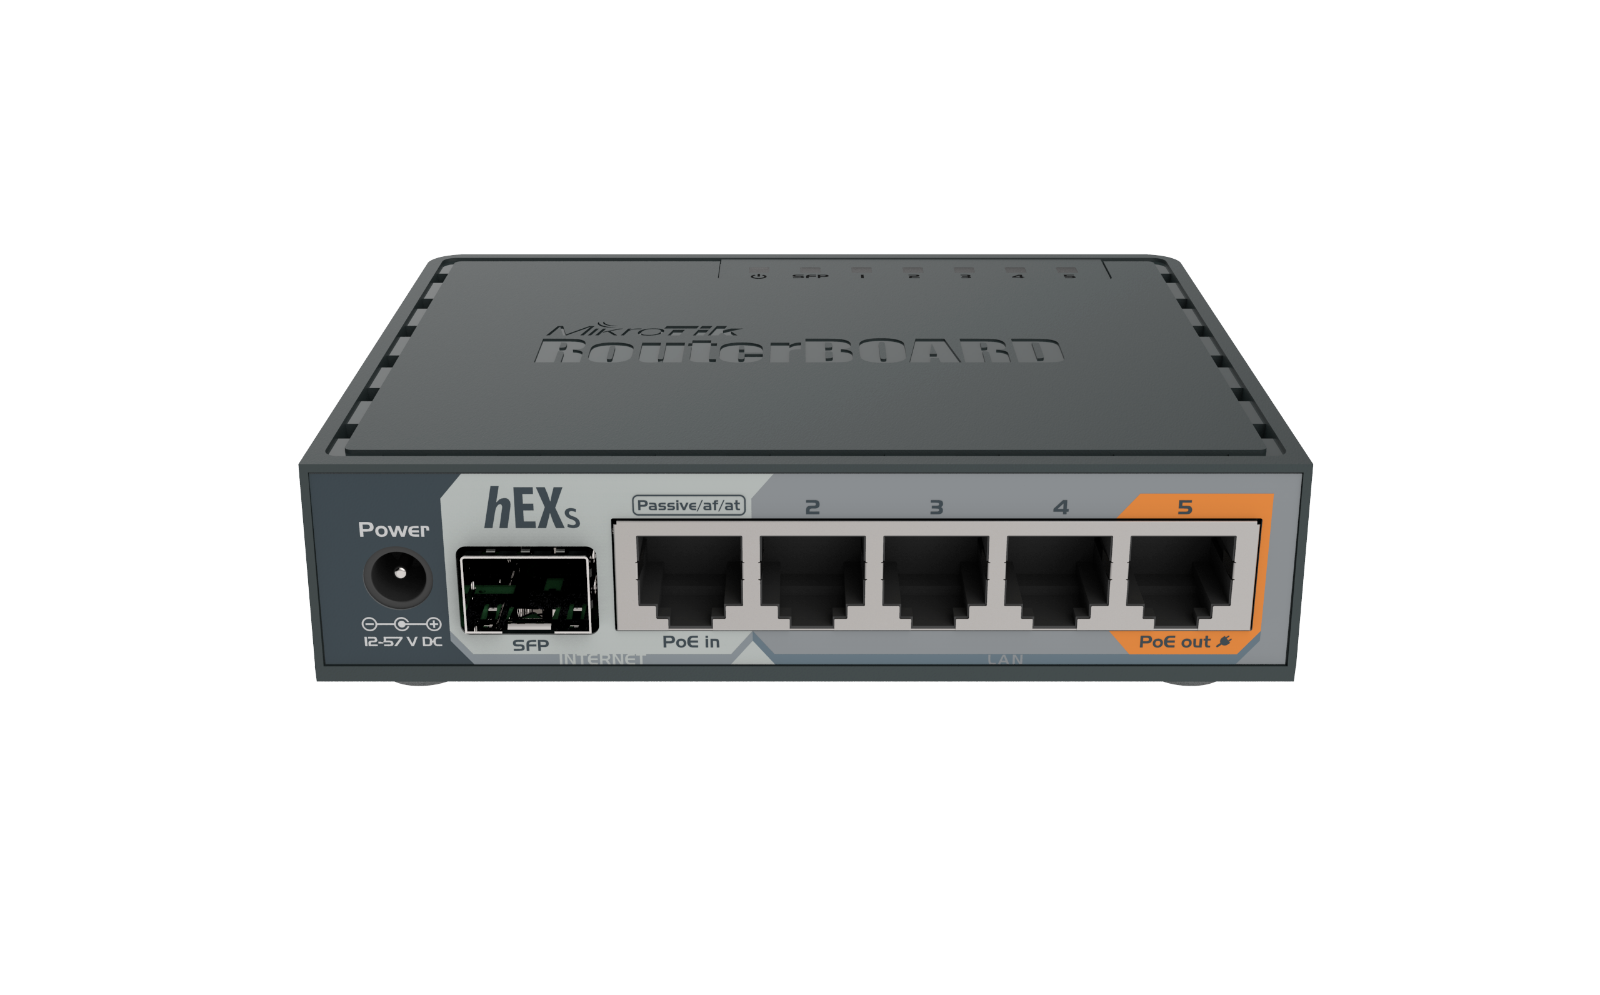 Mikrotik Hex S Rb760igs Ethernet Router 5xgbit Lan, 1xpoe, 1xsfp, 880mhz Cpu Usb